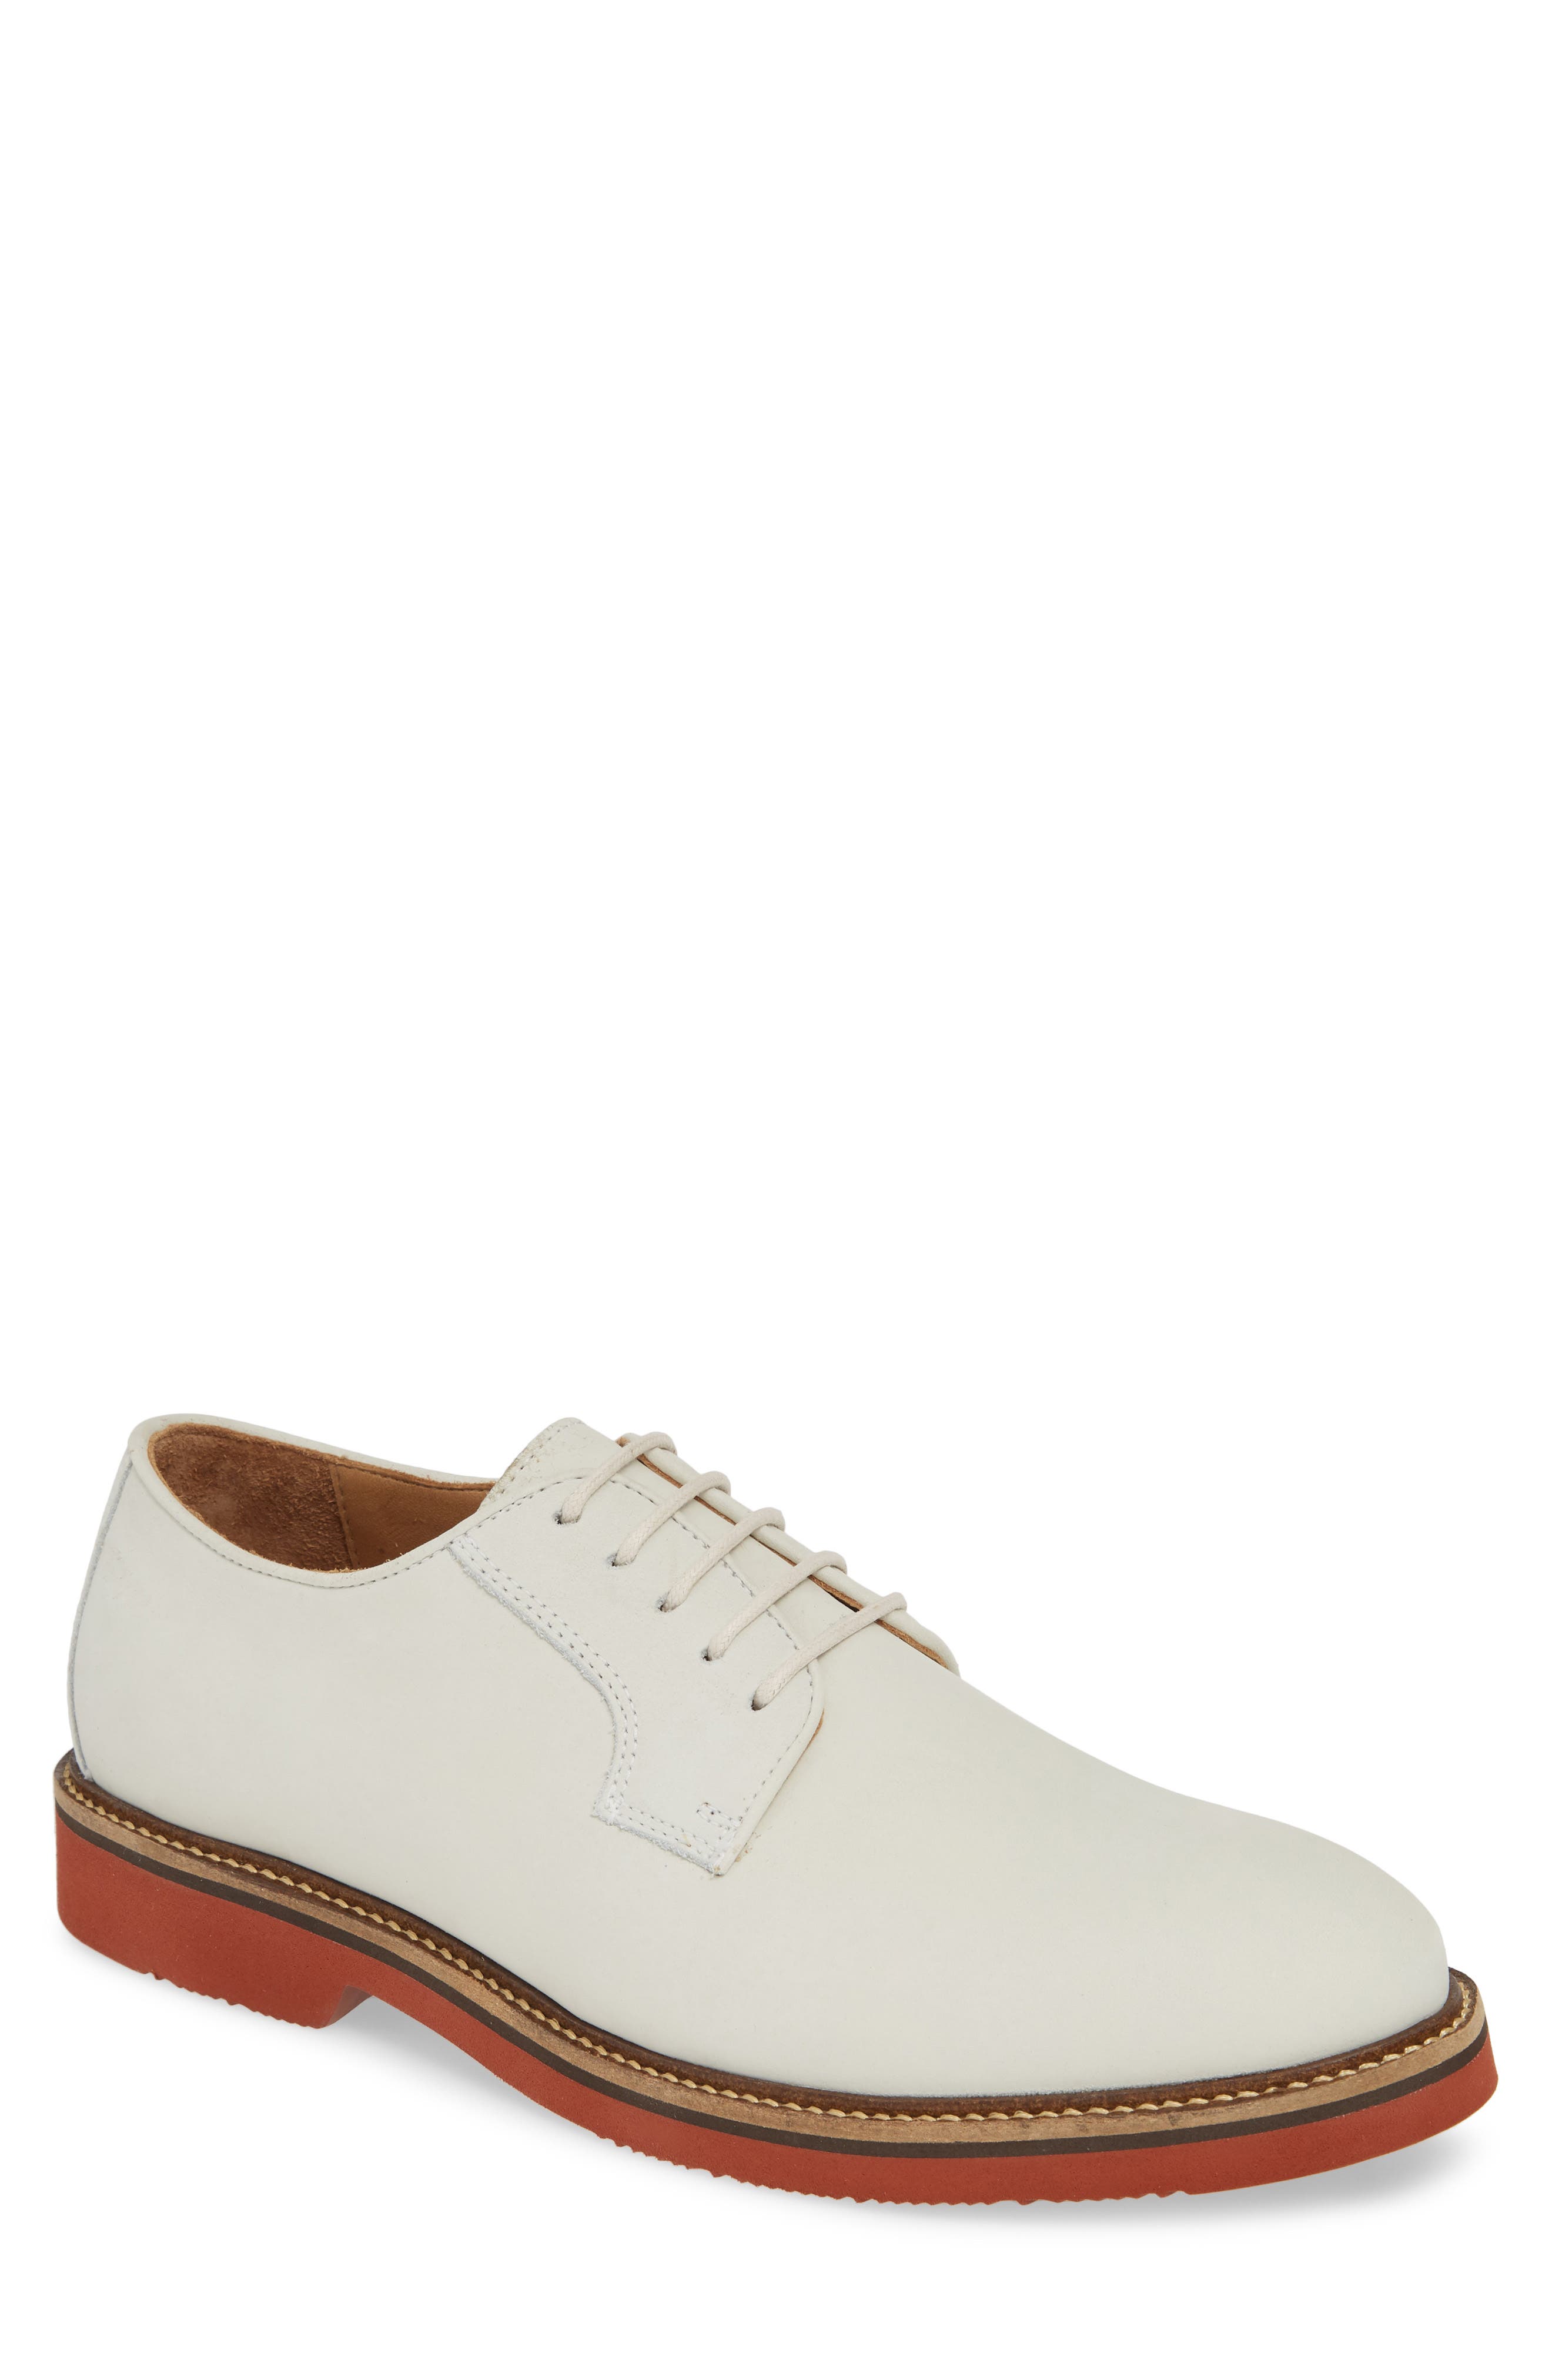 Vintage Style 1950s Men's Shoes | Rockabilly Boots & Shoes